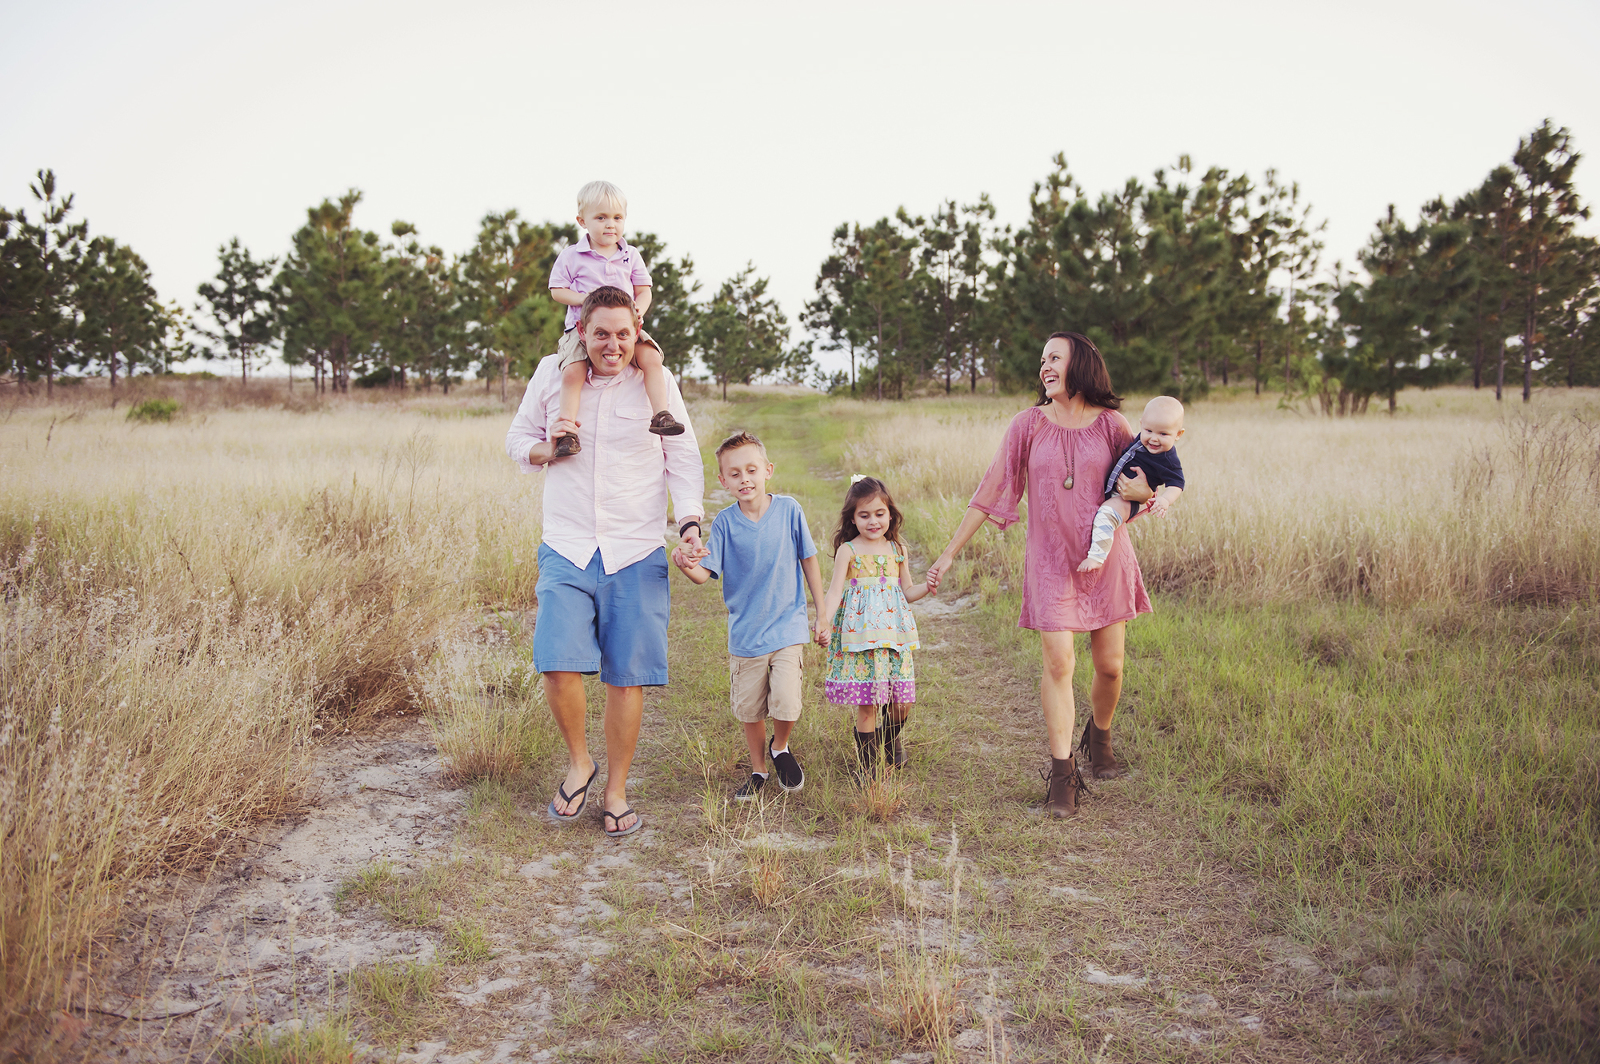 Child & Family Photographer Orlando, Florida | Rebecca Jill